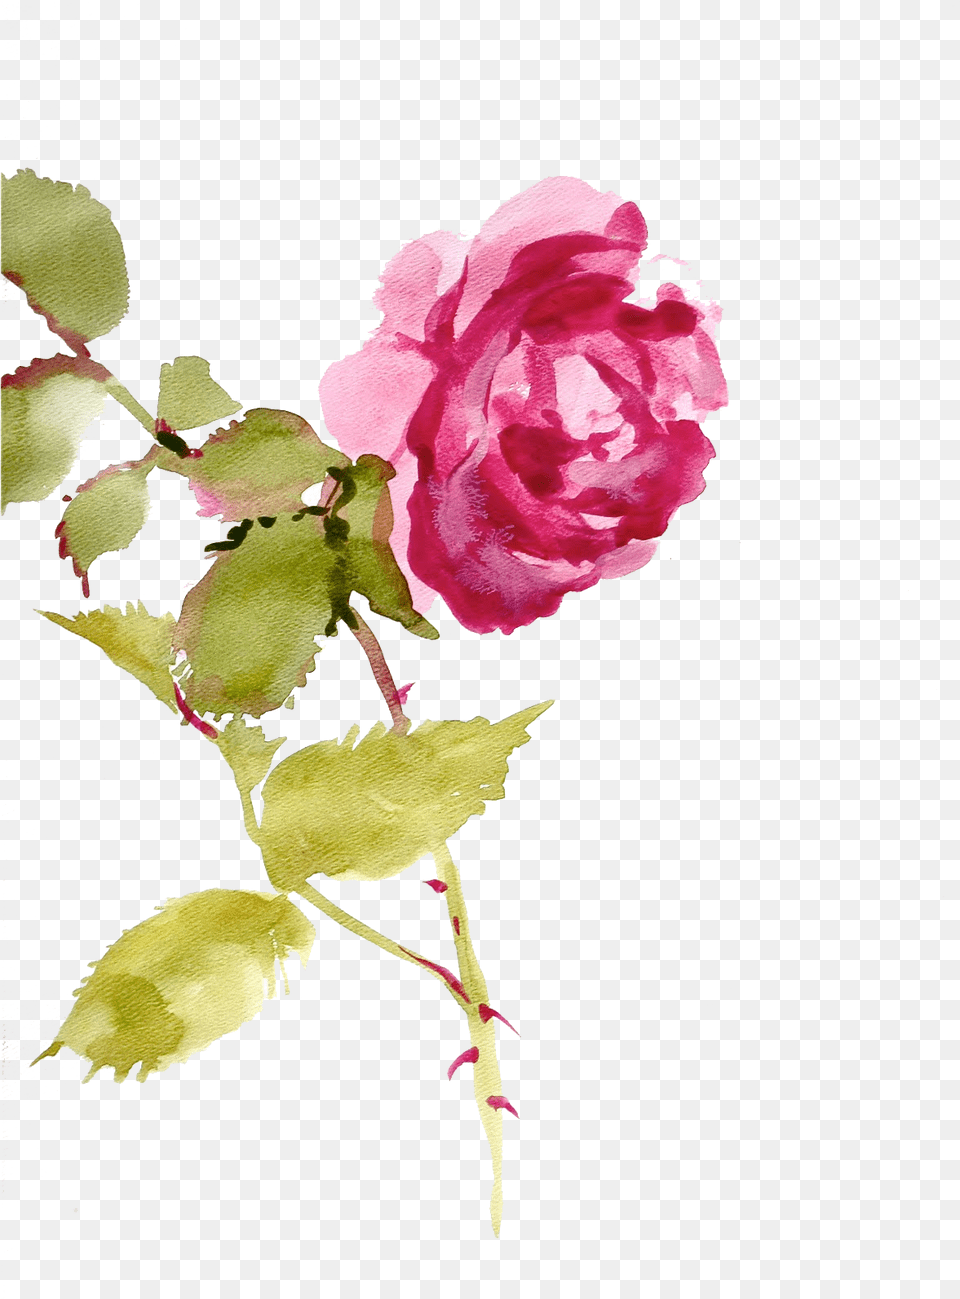 Jaehos Tumblr Com Post Texture Pack Watercolor Painting, Flower, Petal, Plant, Rose Free Png Download